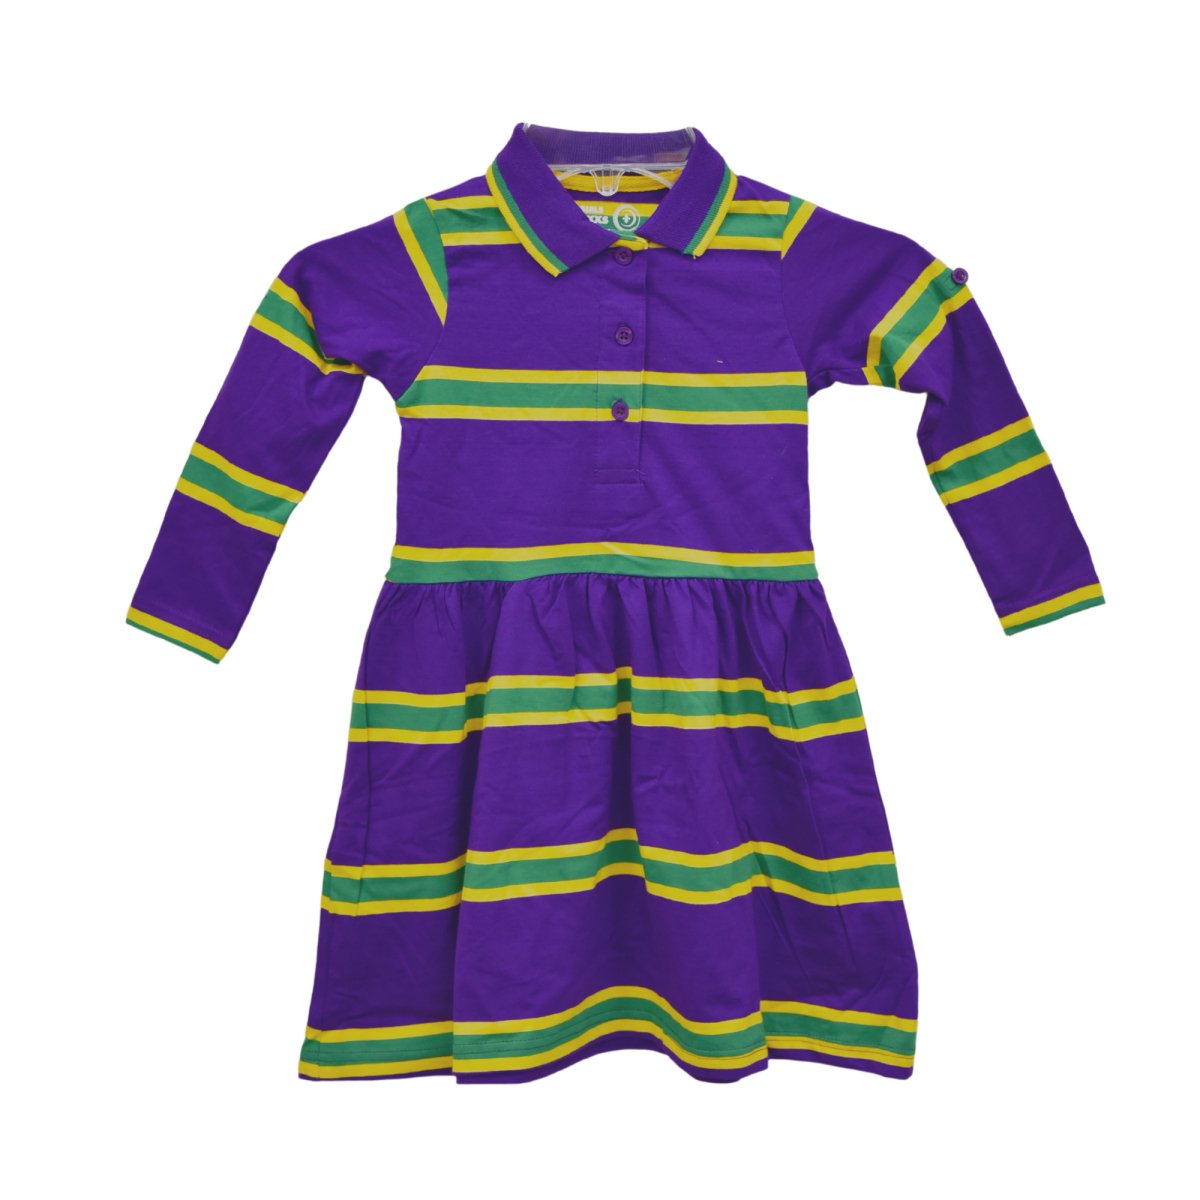 Kids Mardi Gras Girls Purple Dress with Yellow & Green Stripes - Mardi Gras Apparel